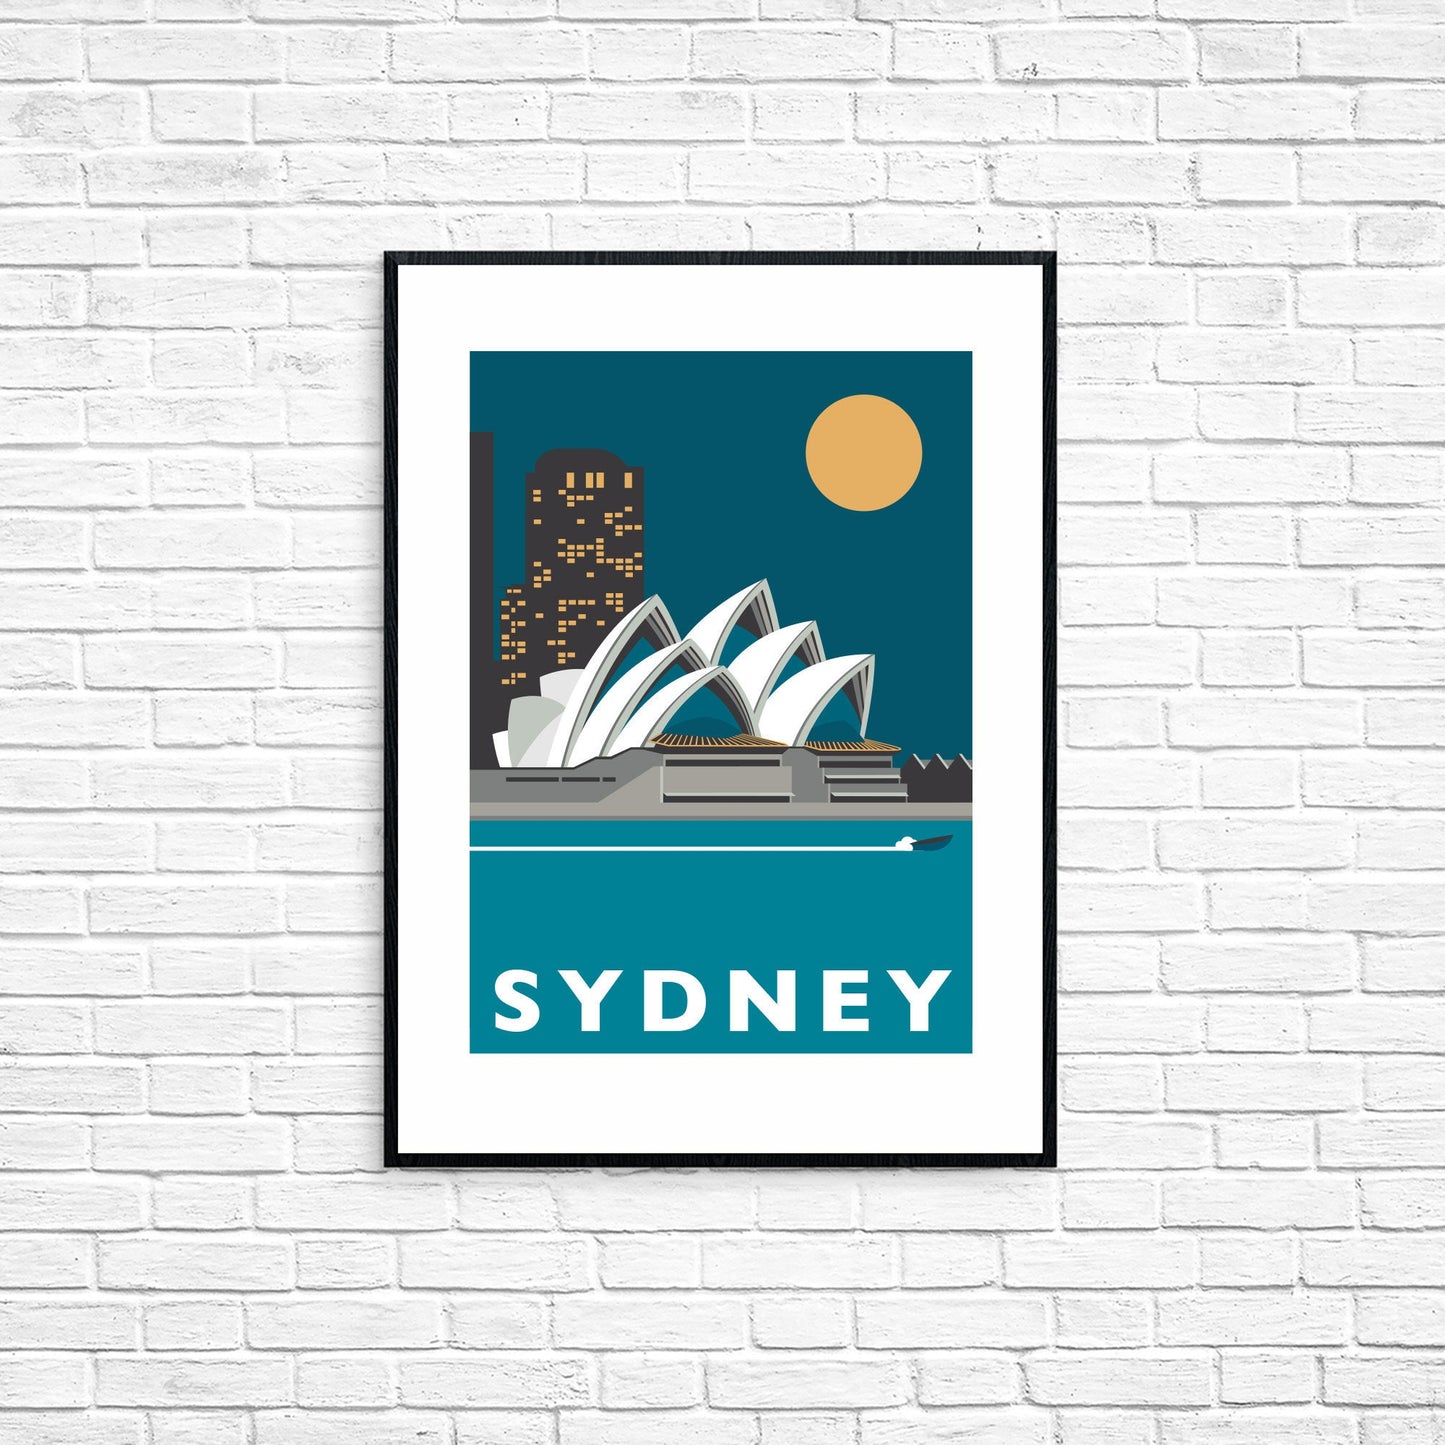 SYDNEY Travel Poster - Sydney Opera House - Art Deco Print - Illustration by Rebecca Pymar